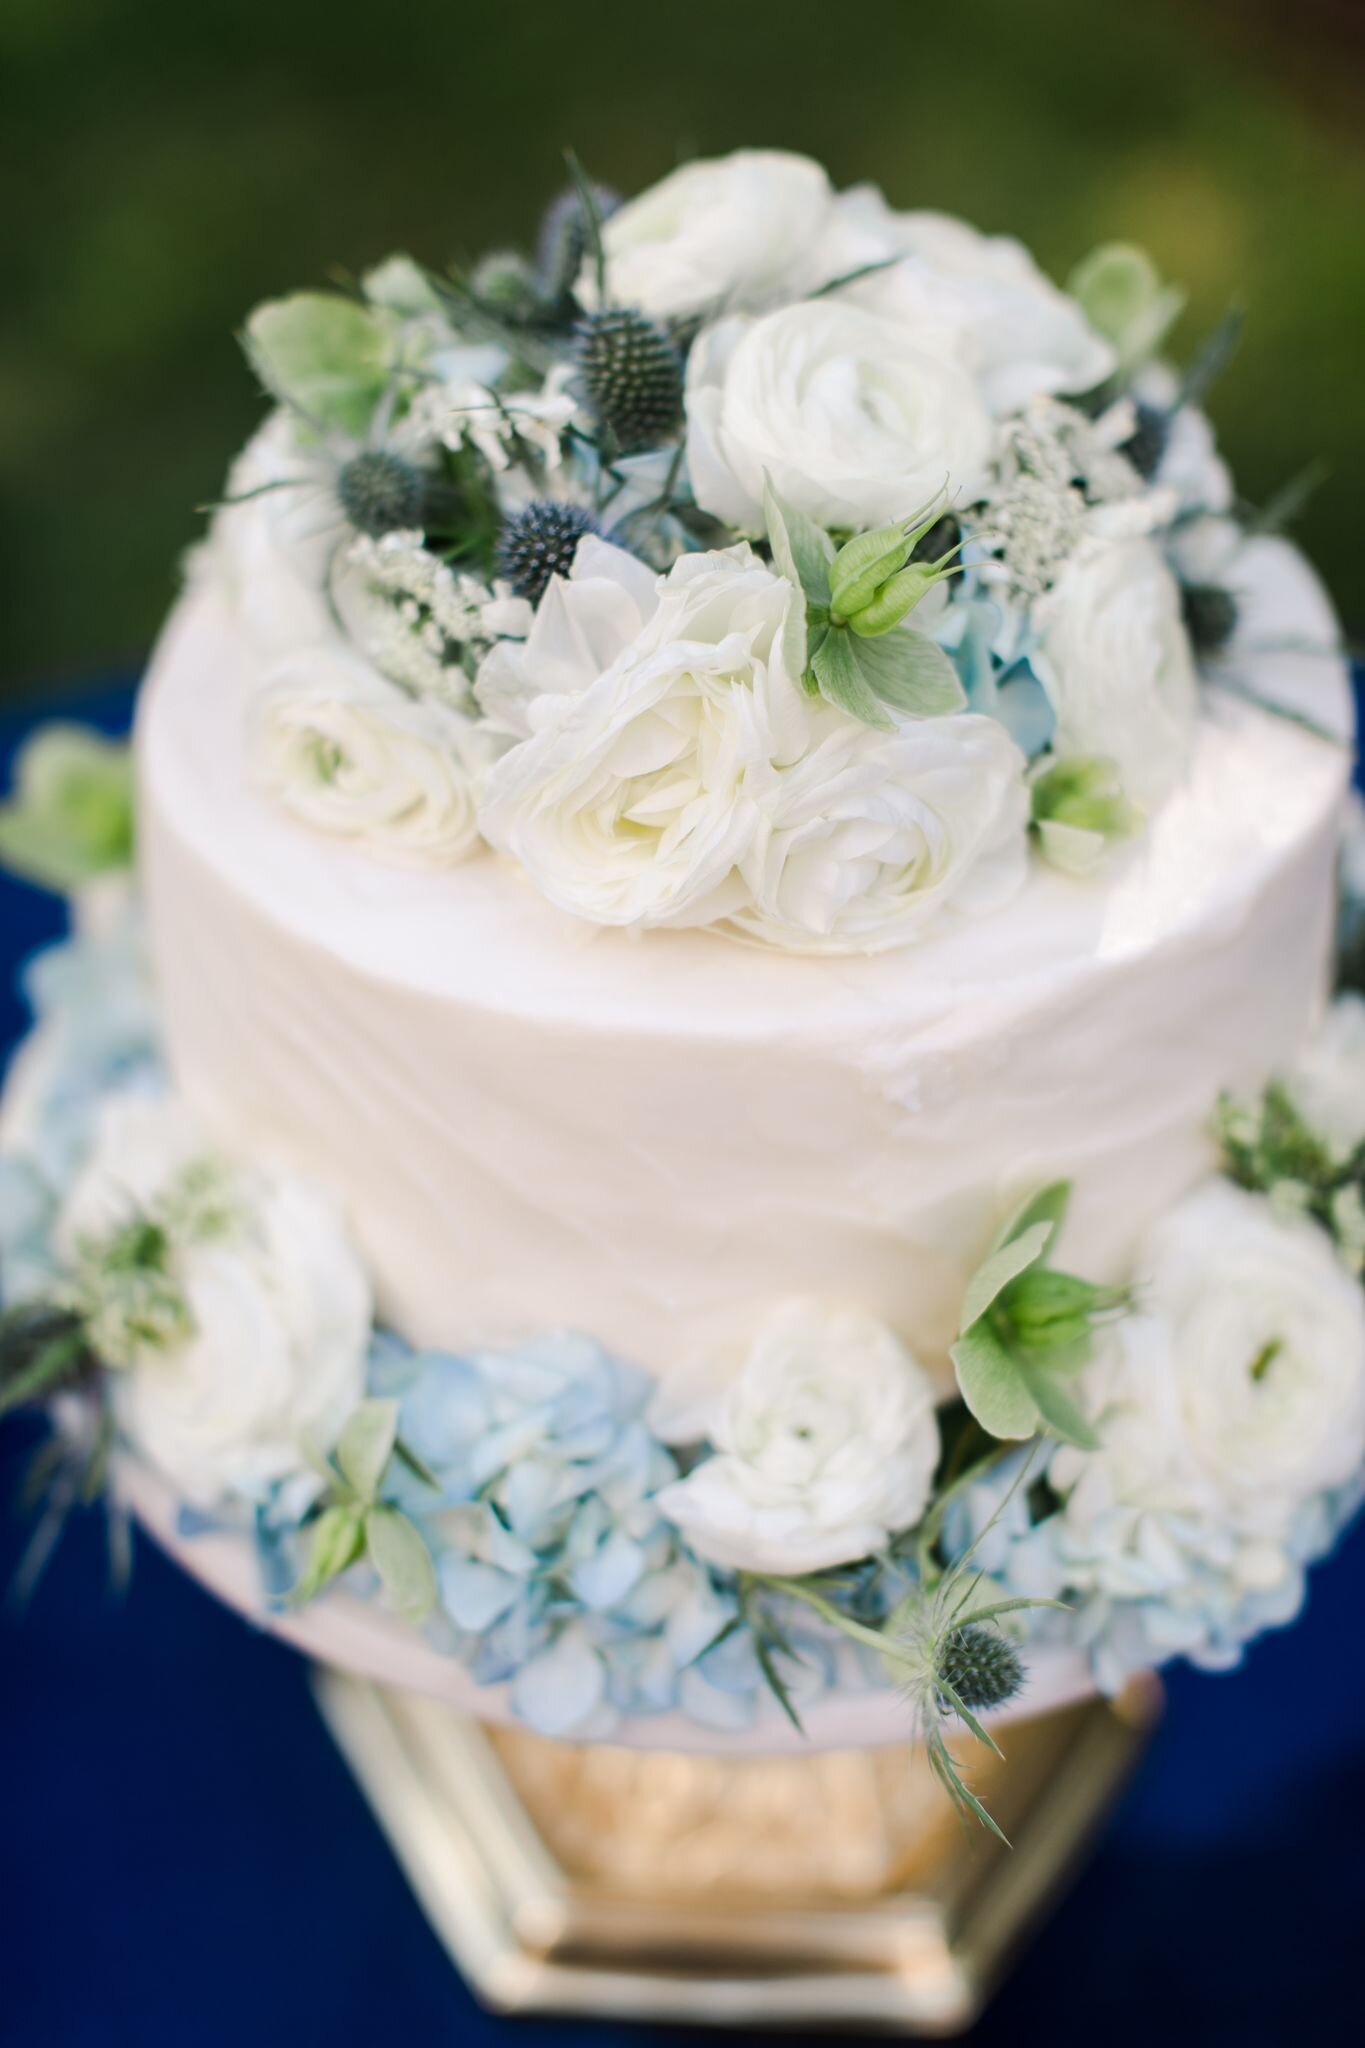 Becky Casto Brag Wedding Cake Greg Boulus Events Full Service Wedding Coordination and Floral Design Augusta GA.jpeg